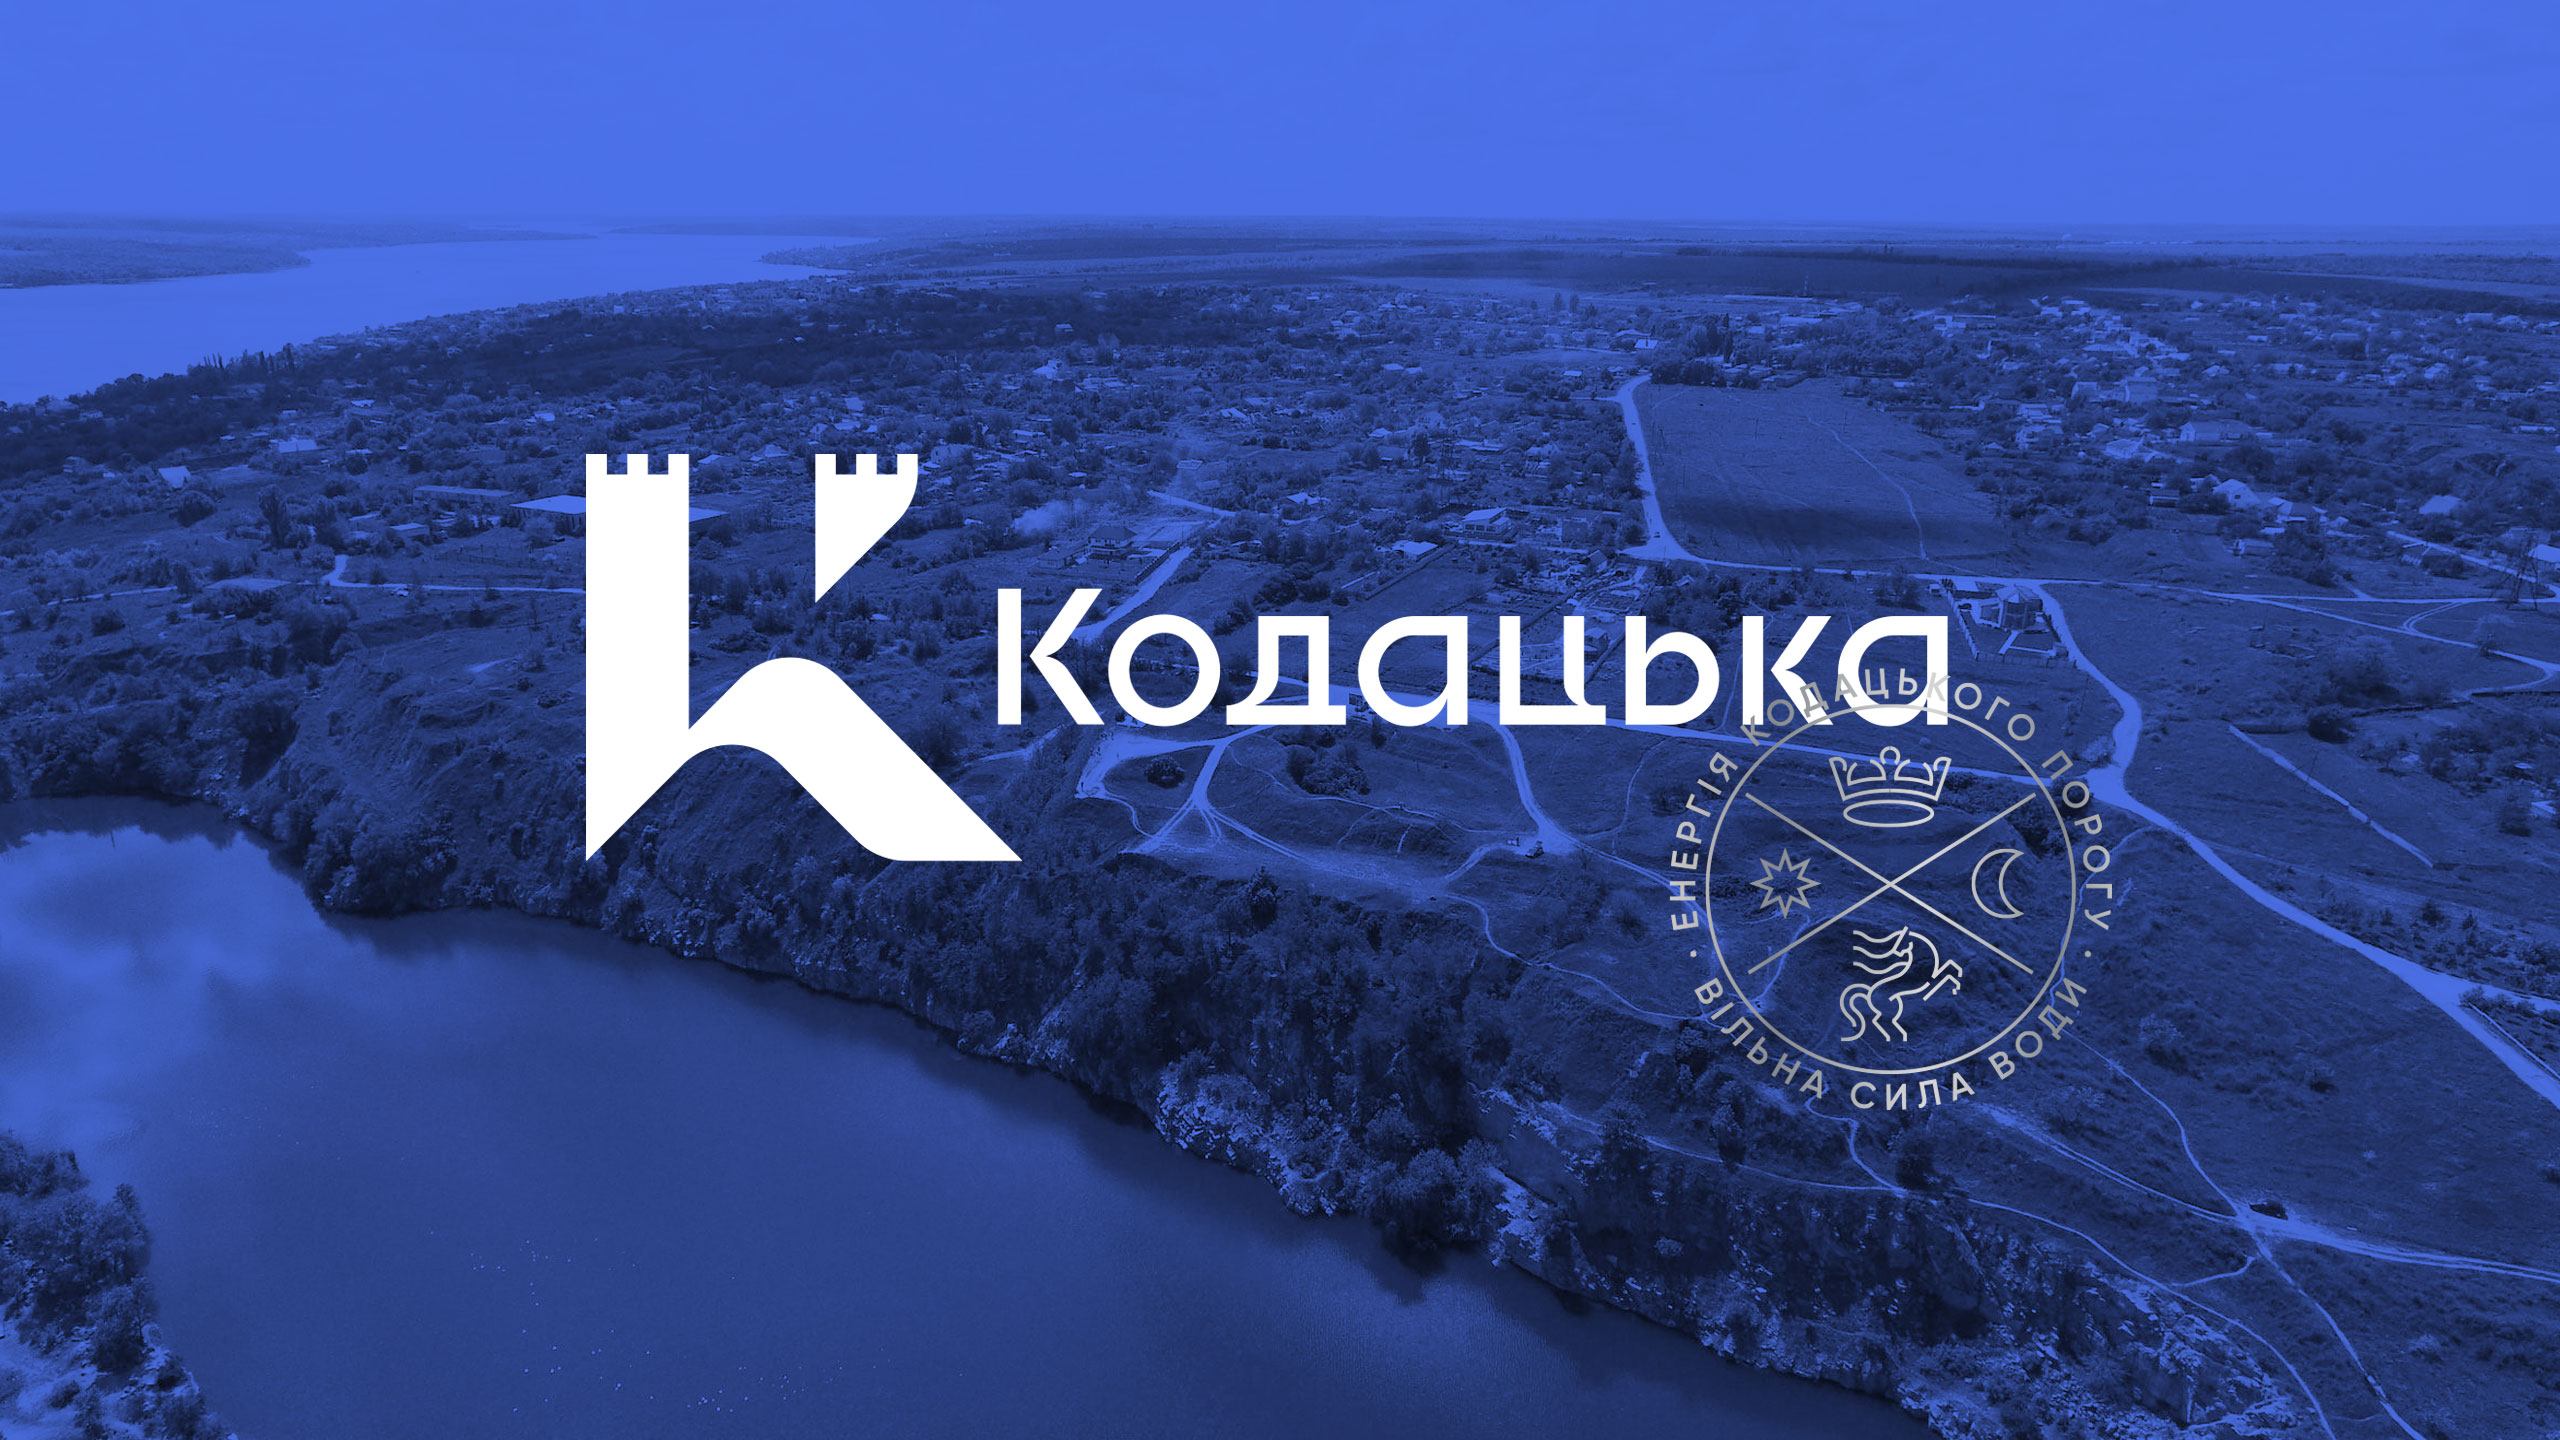 Kodatska Branding – The Power of Water Unleashed